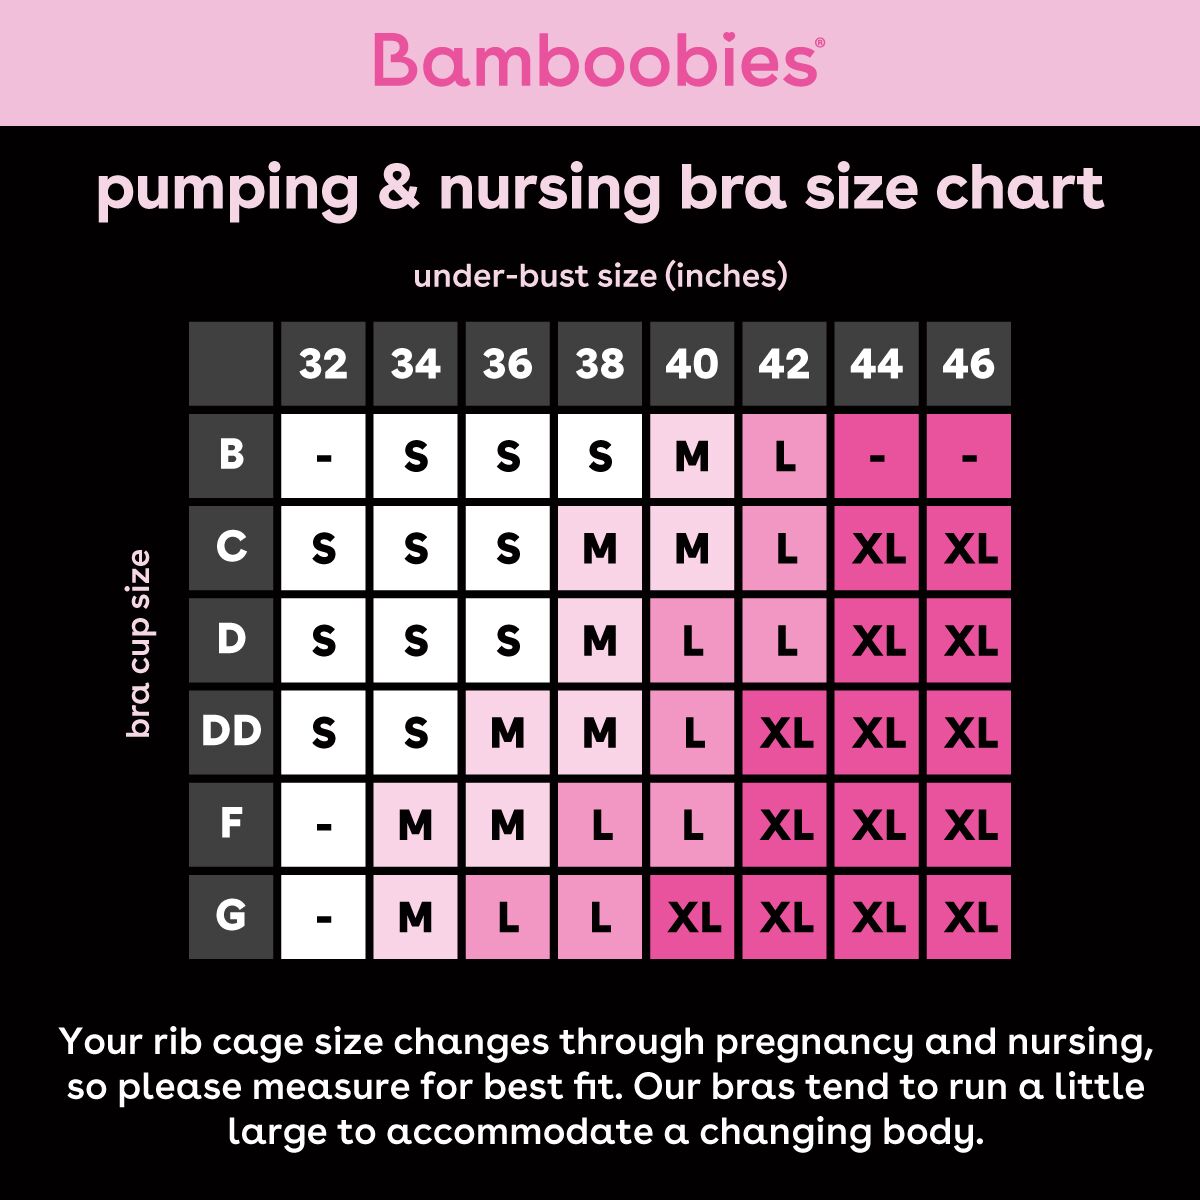 hands-free pumping &amp; nursing bra